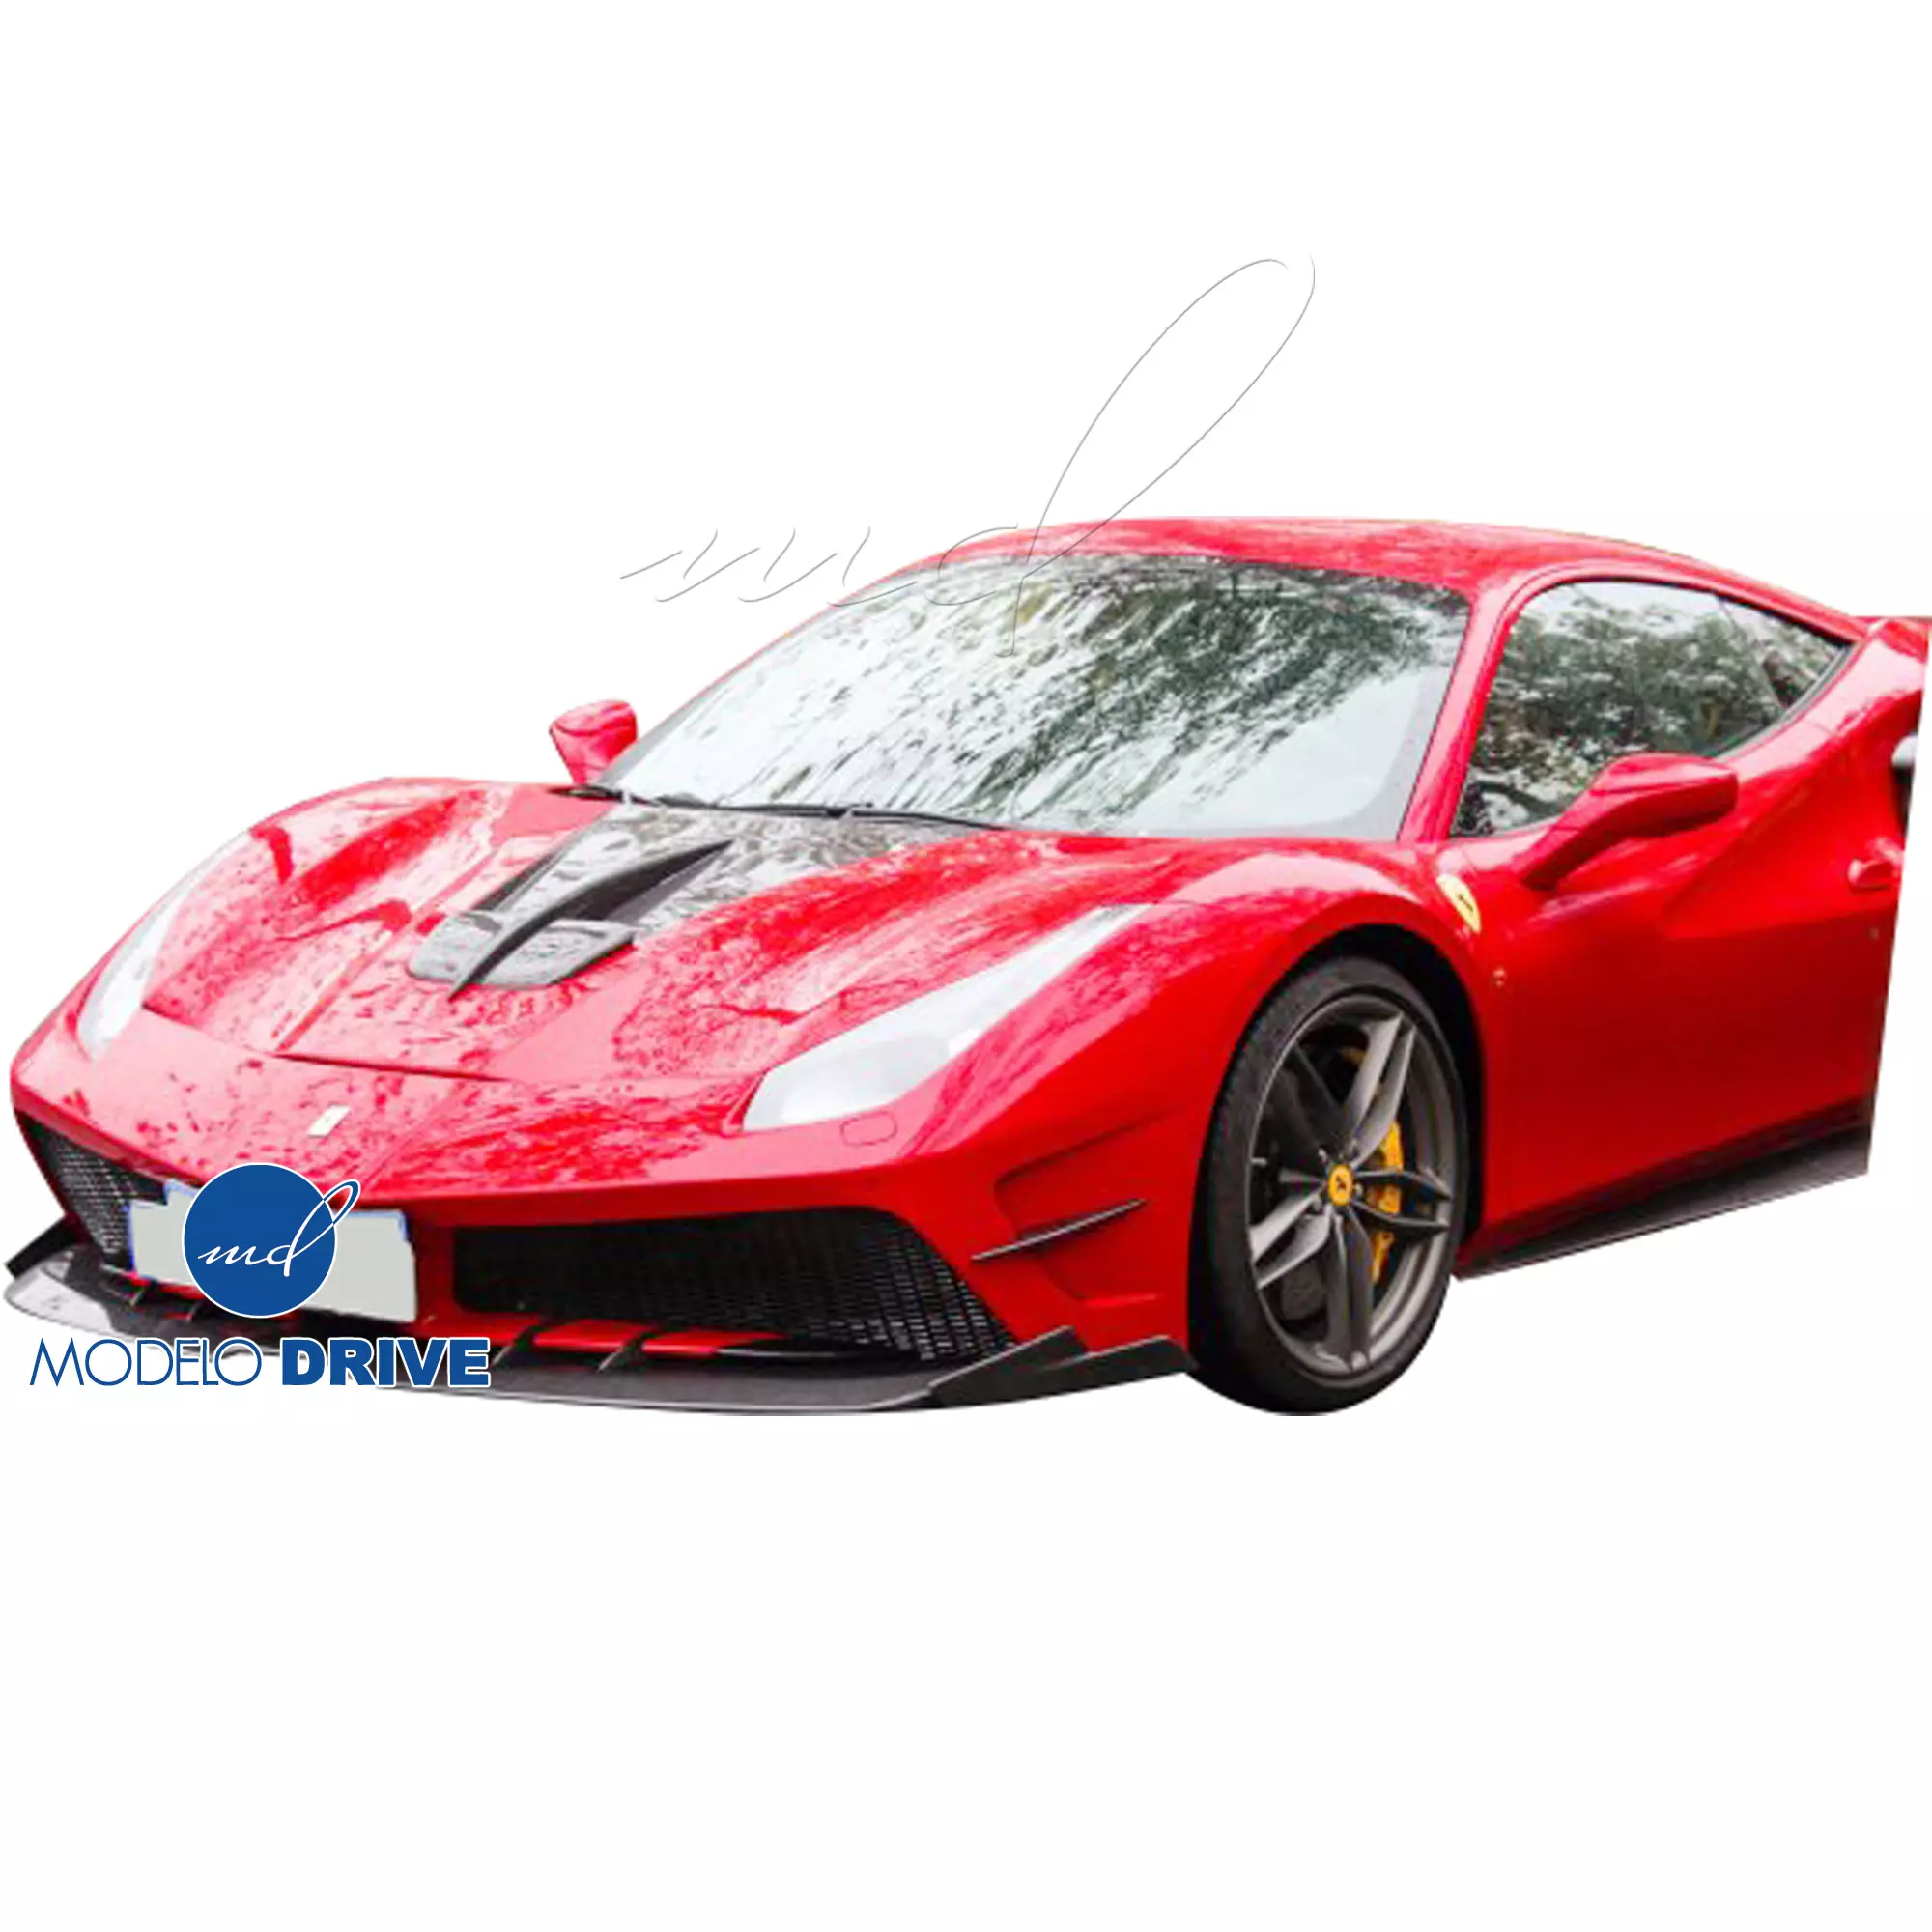 ModeloDrive Partial Carbon Fiber MDES Body Kit > Ferrari 488 GTB F142M 2016-2019 - Image 18